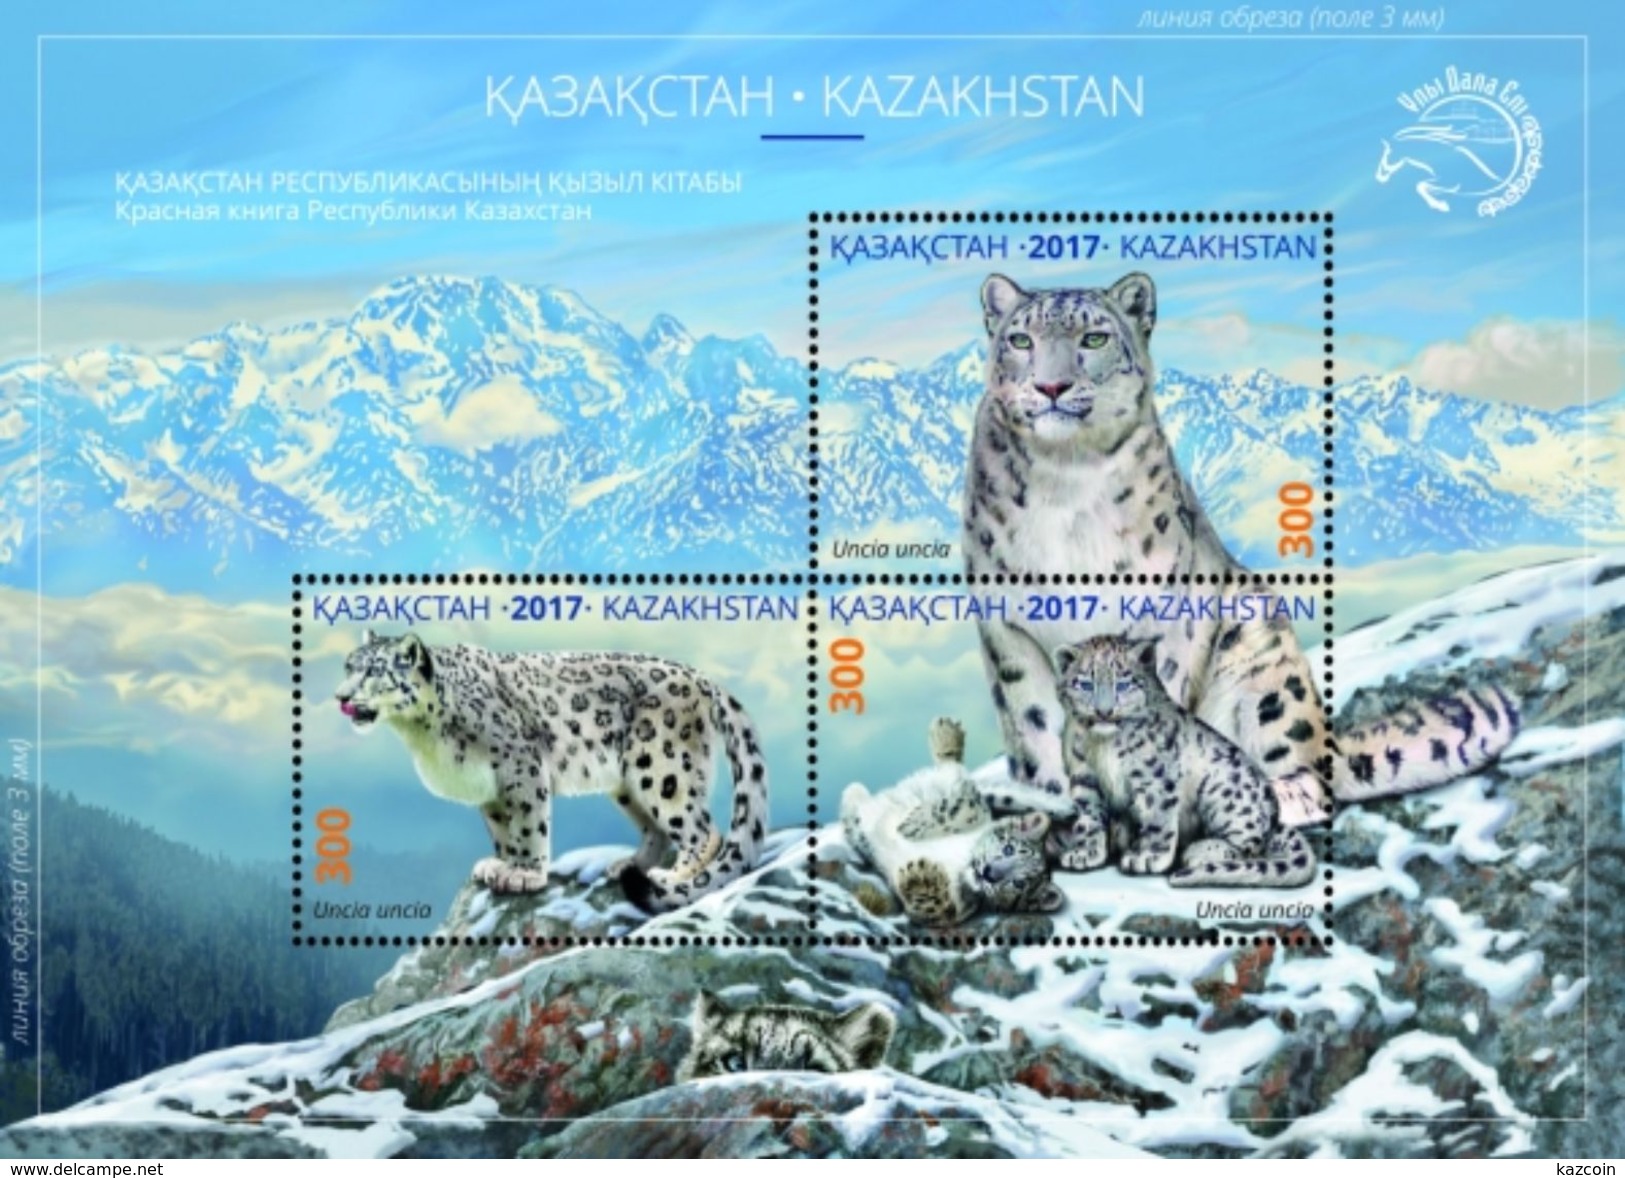 2017 Kazakhstan Kasachstan - Uncia Uncia Or Panthera Uncia - Snow Leopard - Mountains, Big Cats - Kazakhstan